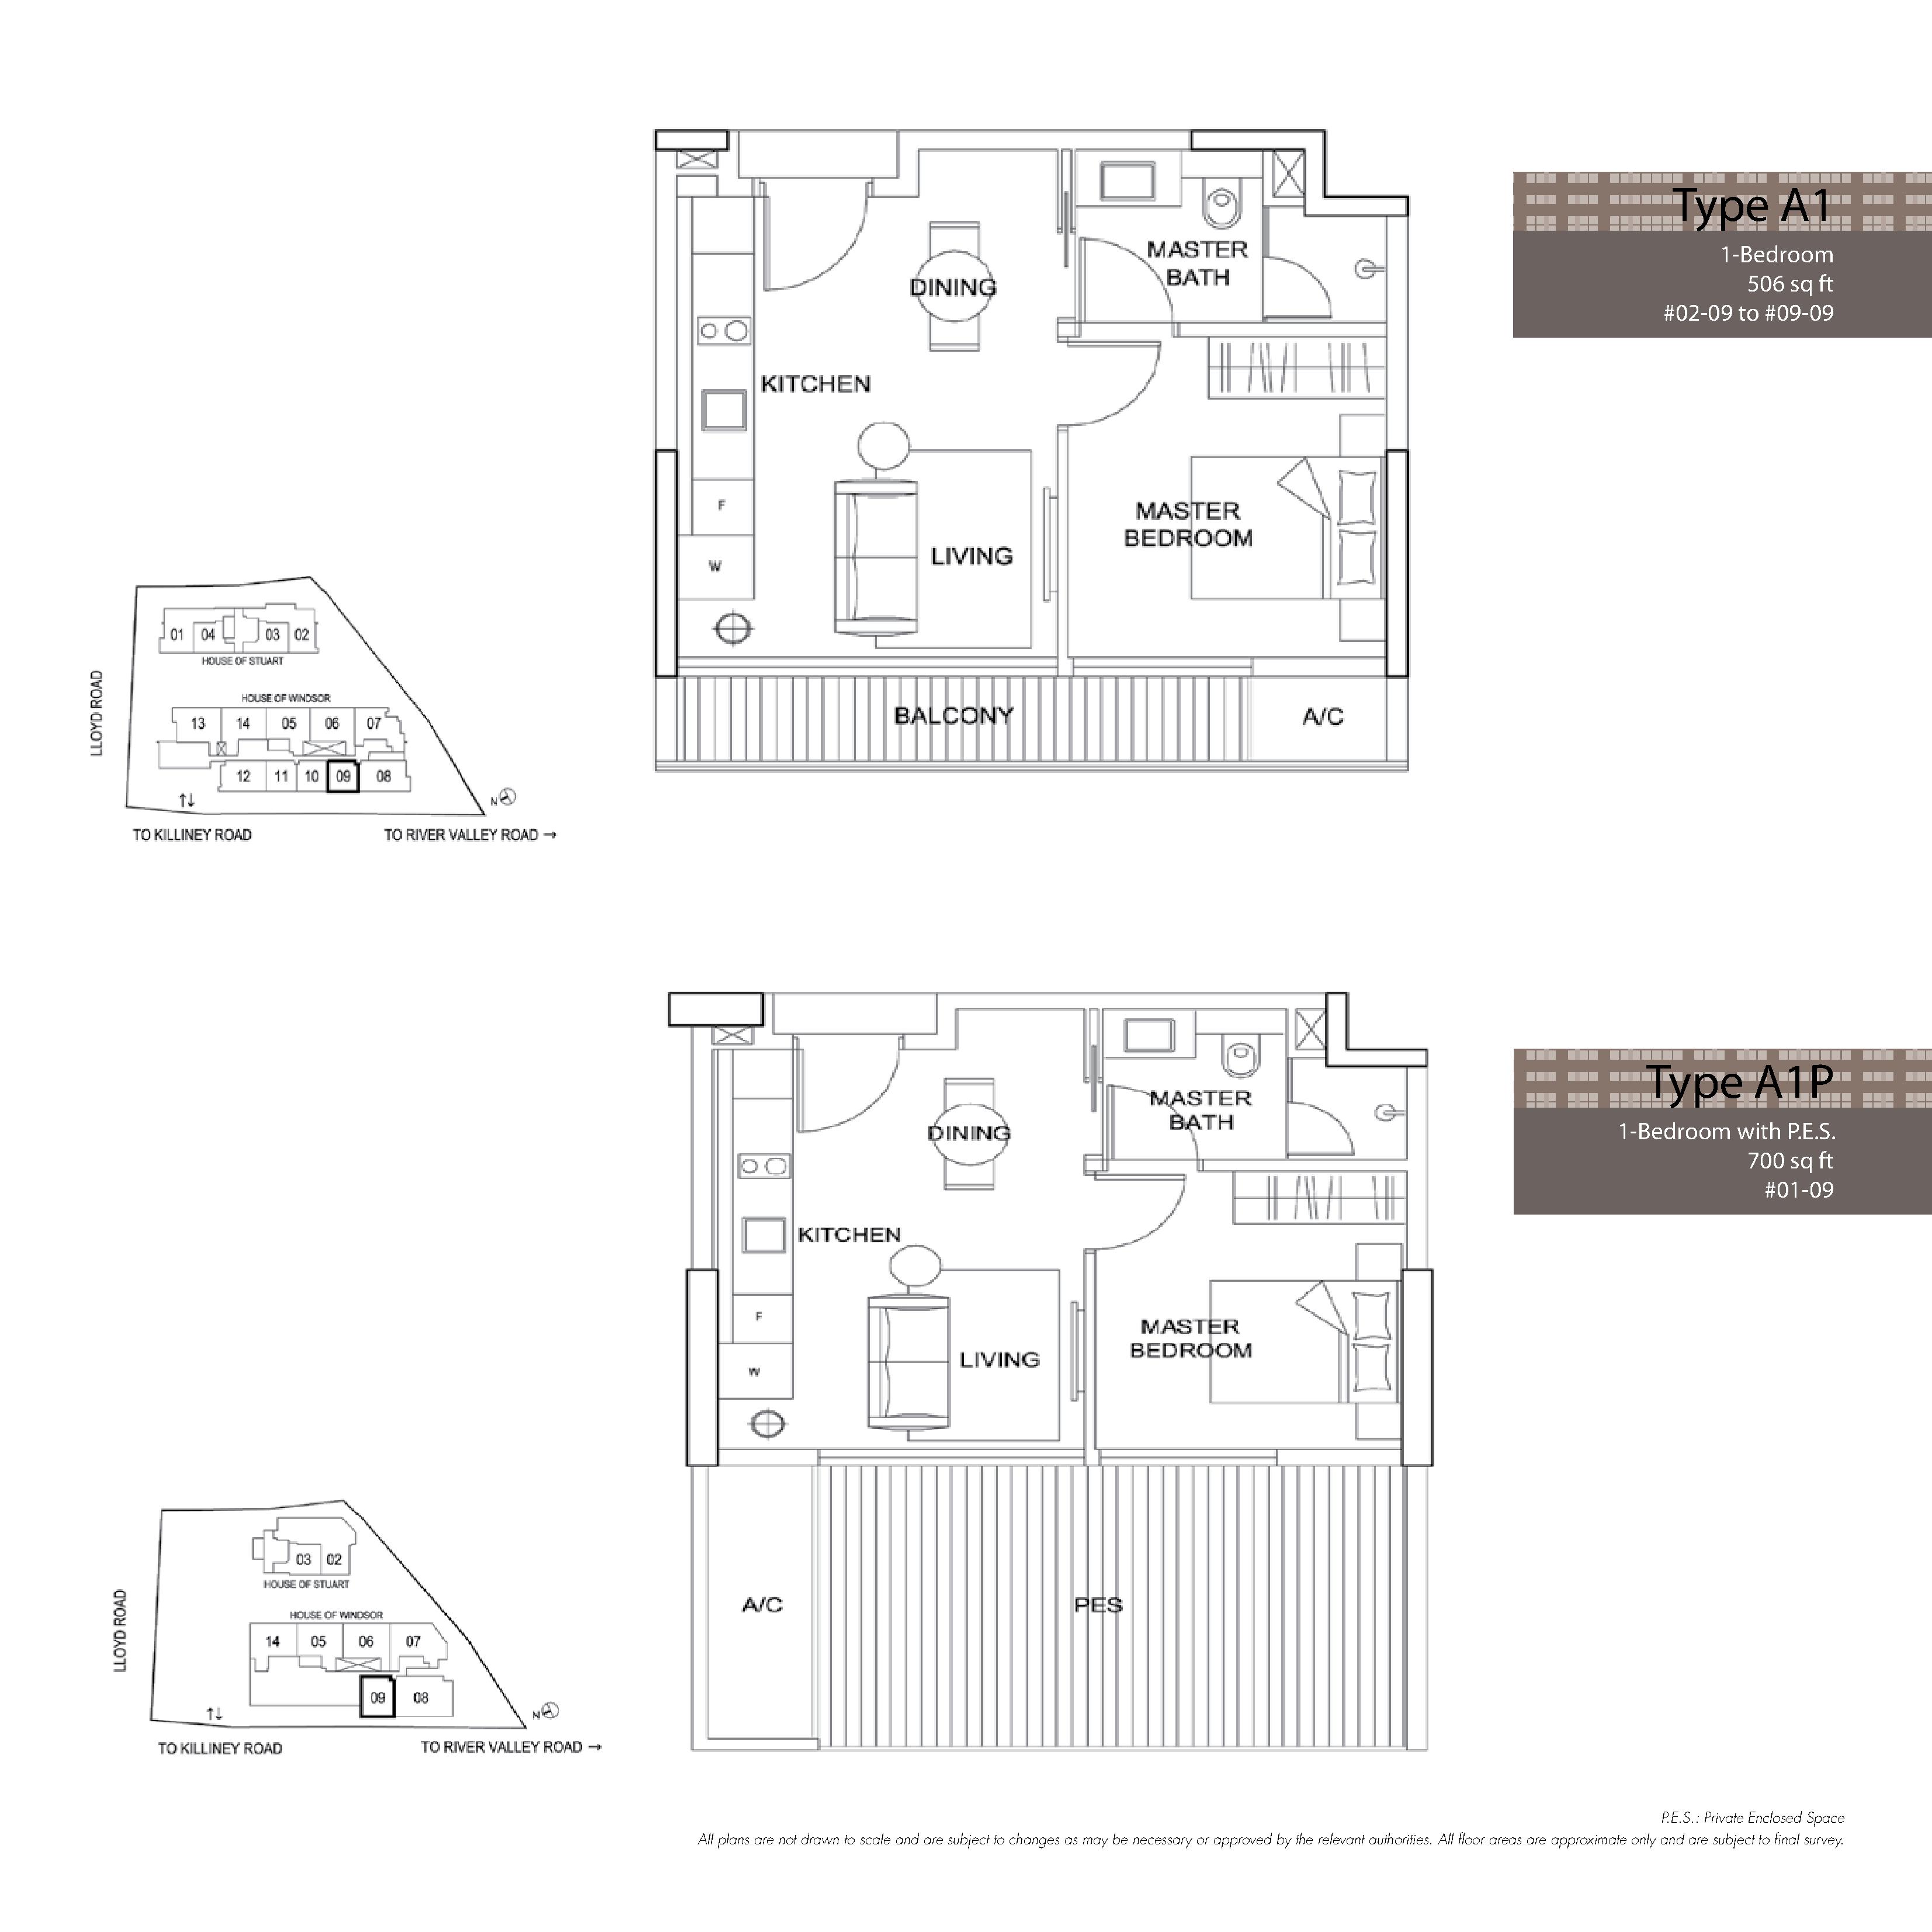 The Boutiq @ Killiney 1 Bedroom/1 Bedroom PES Floor Plans Type A1, A1P